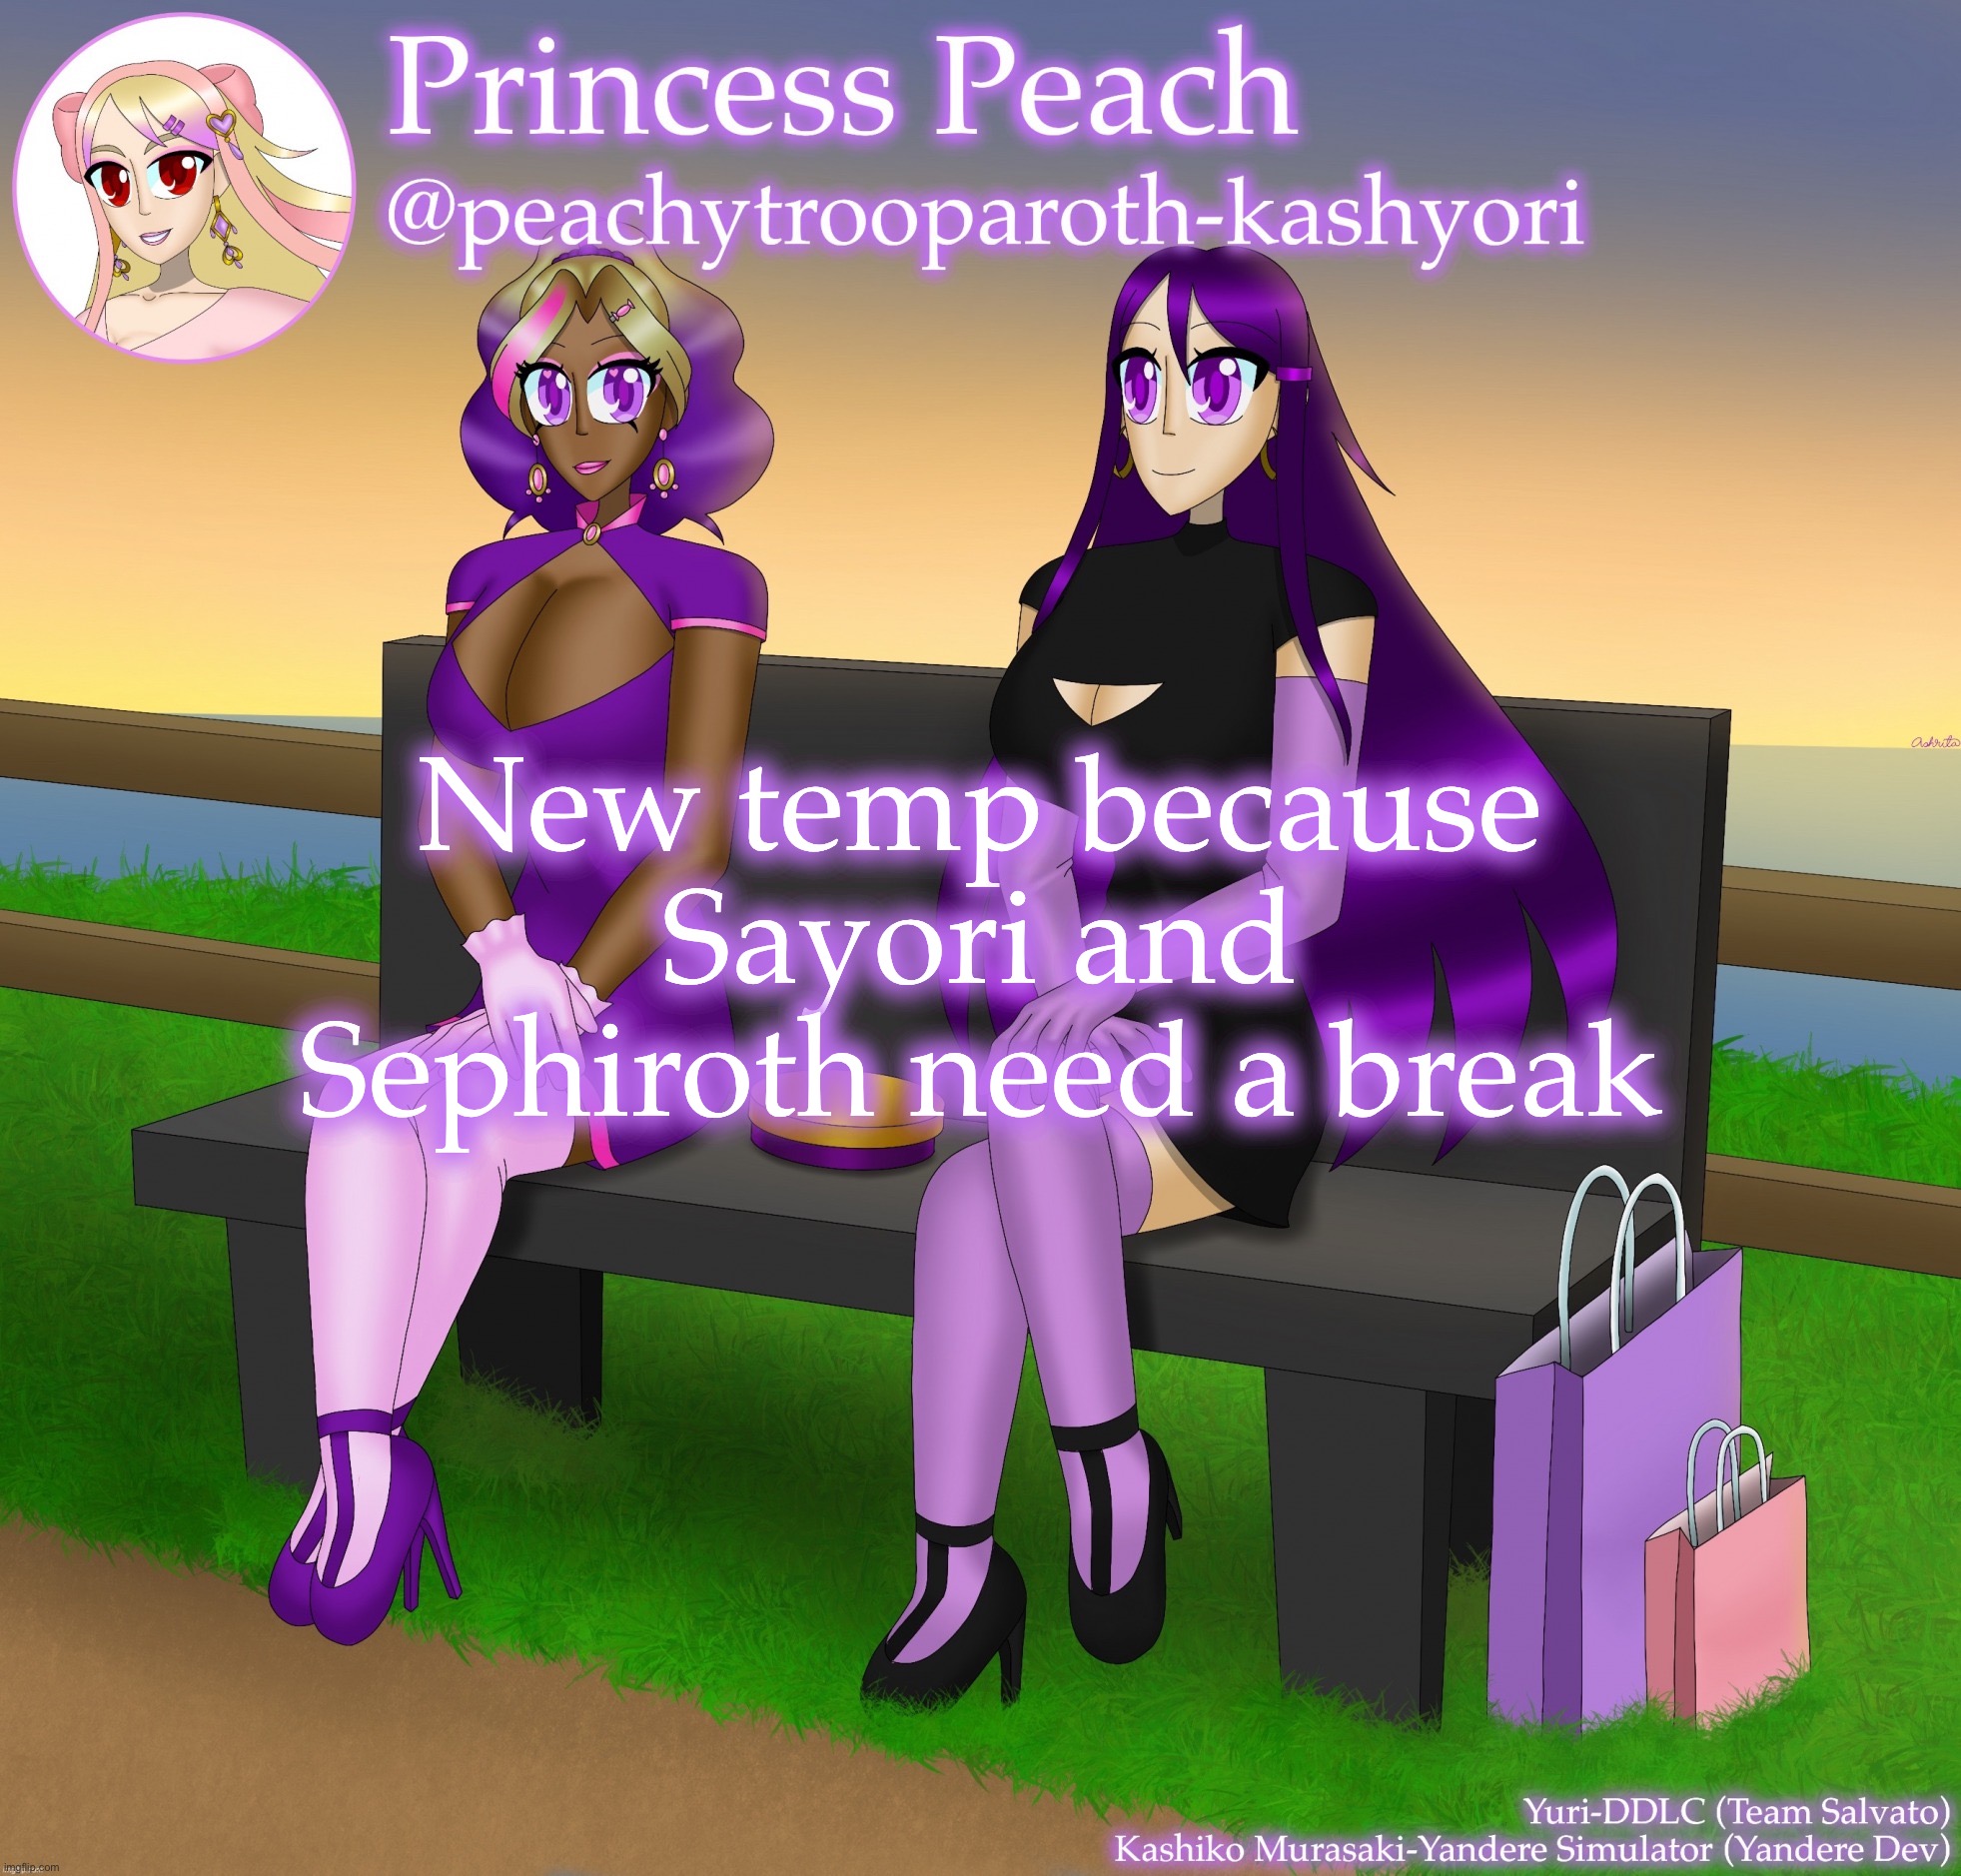 Yuri and Kashiko Murasaki | New temp because Sayori and Sephiroth need a break | image tagged in yuri and kashiko murasaki | made w/ Imgflip meme maker